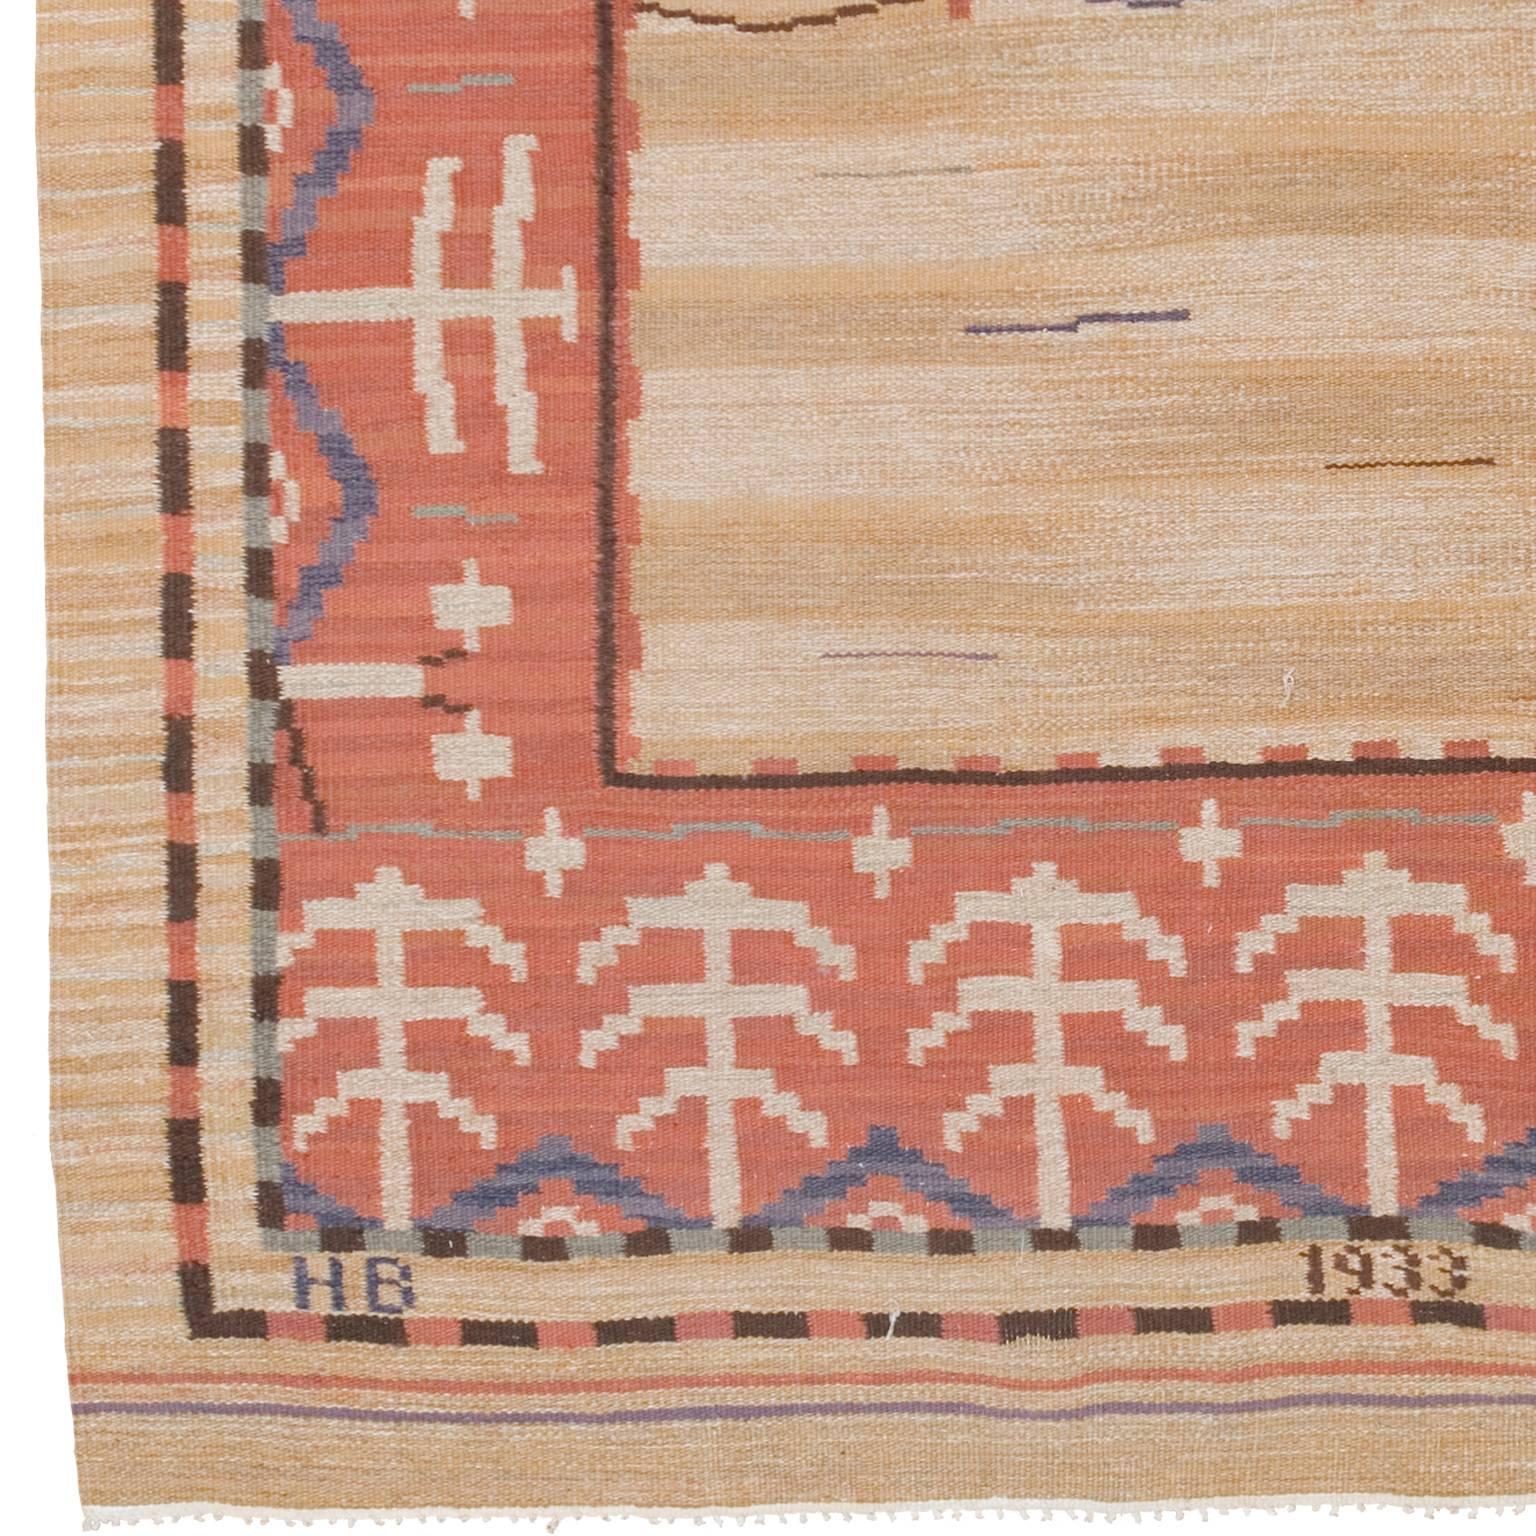 Swedish flat-weave rug, 1933
Sweden, circa 1933
Initialed: HB, 1933, VB.